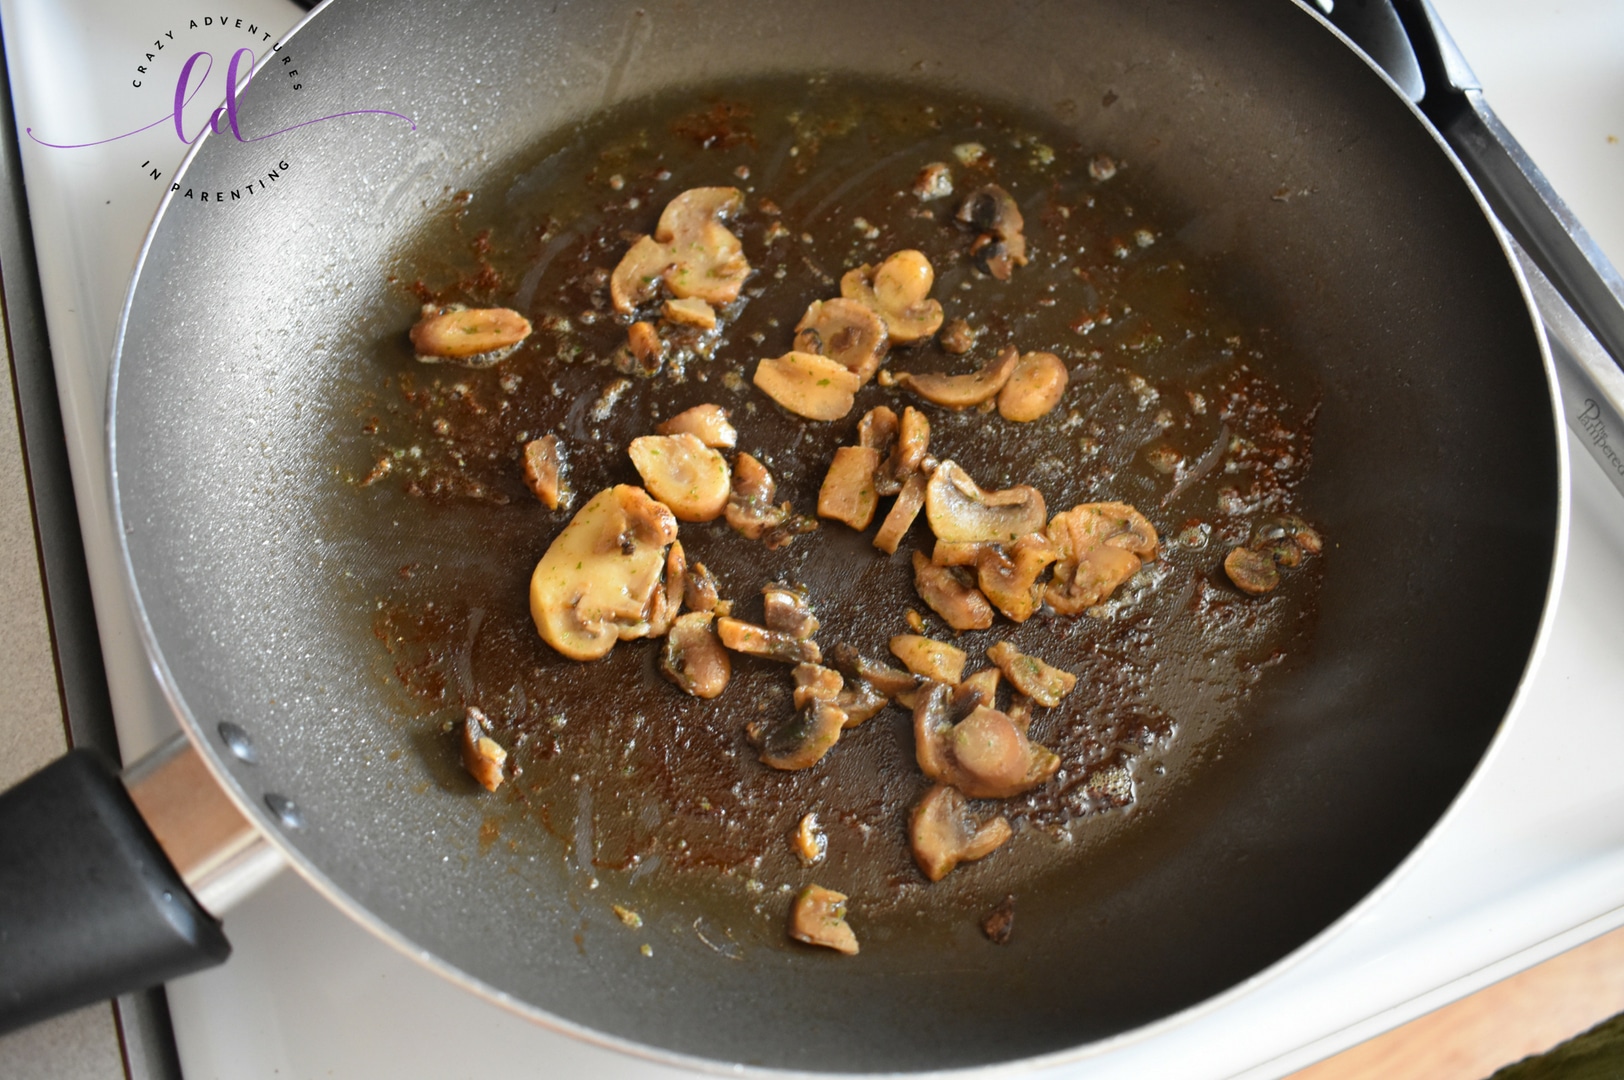 Tyson Fully Cooked Dinner and Entrée Kit - Seasoned Steak Fillet & Mushrooms sautéed mushrooms